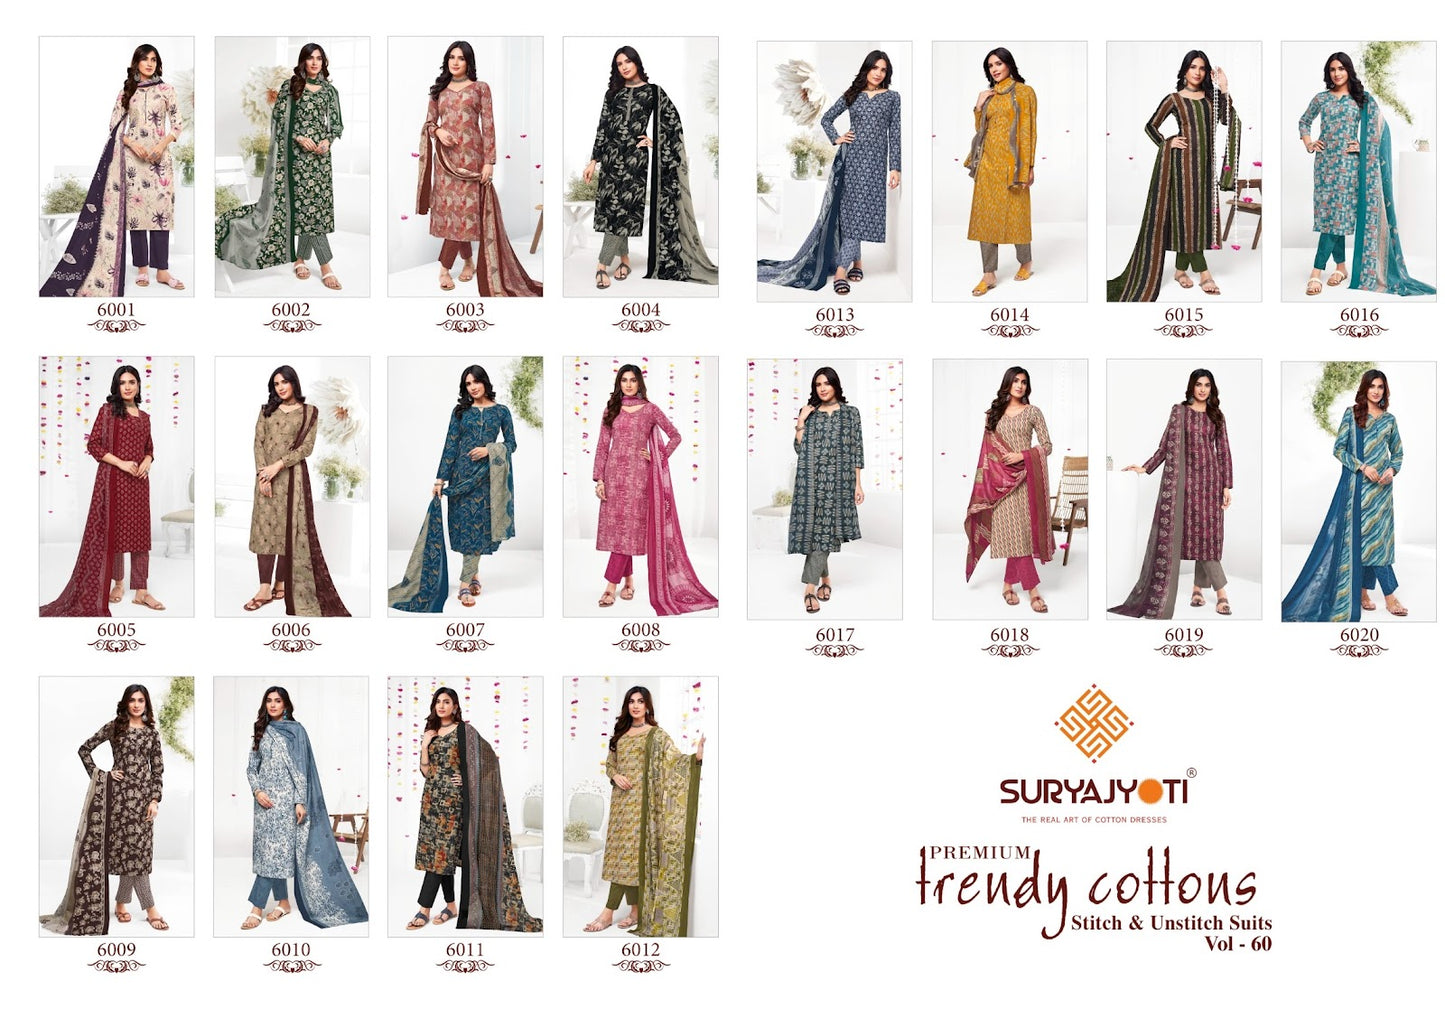 Trendy Cotton Vol 60 Suryajyoti Cotton Dress Material